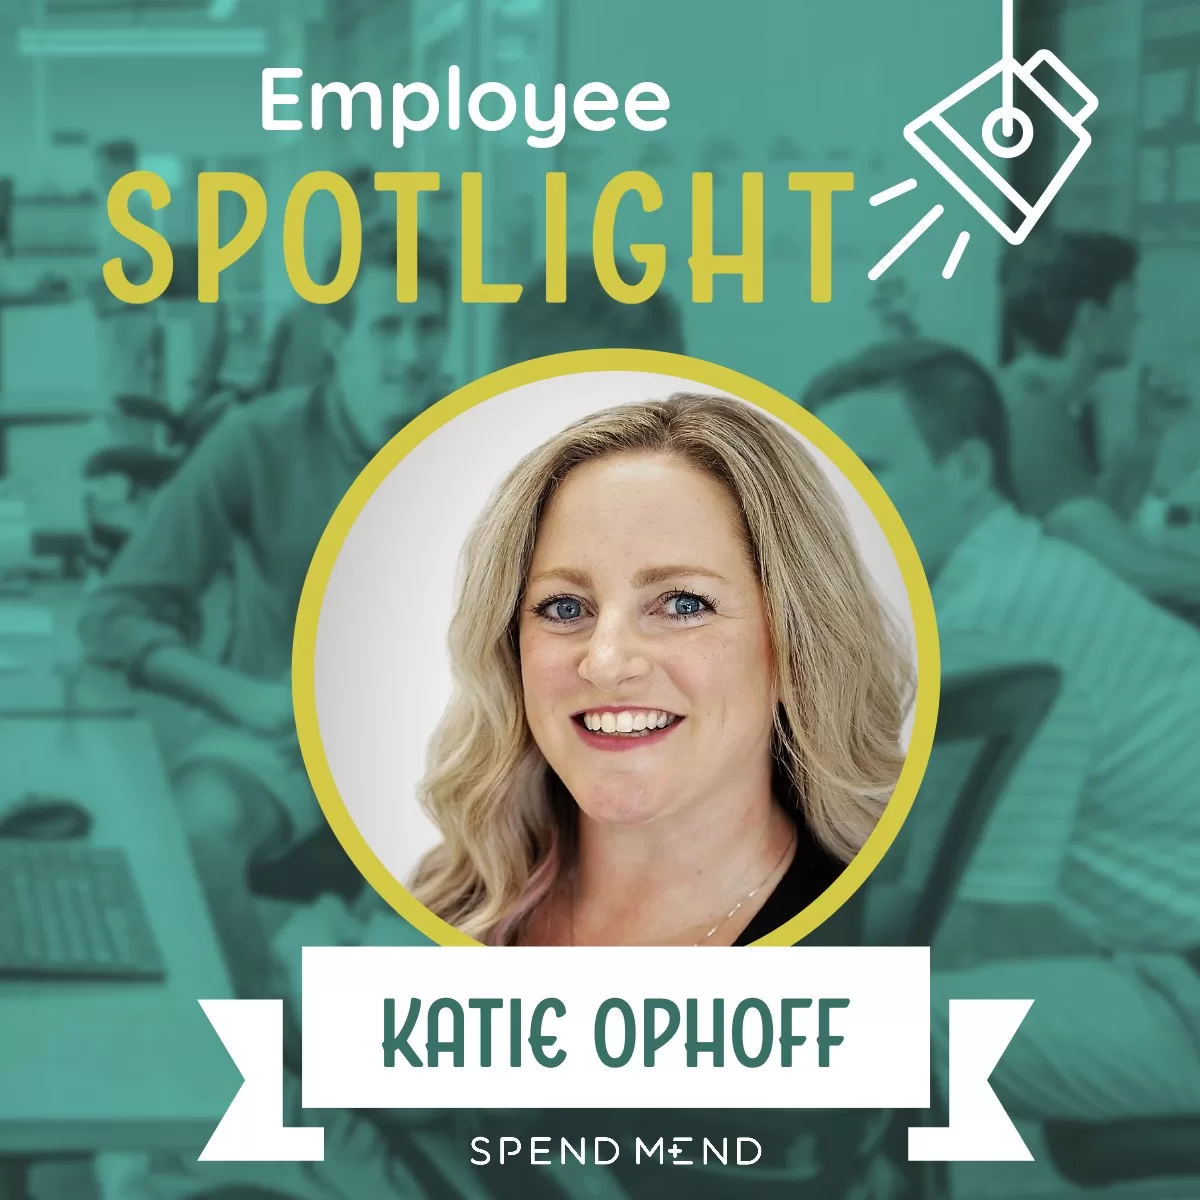 Employee Spotlight: Katie Ophoff